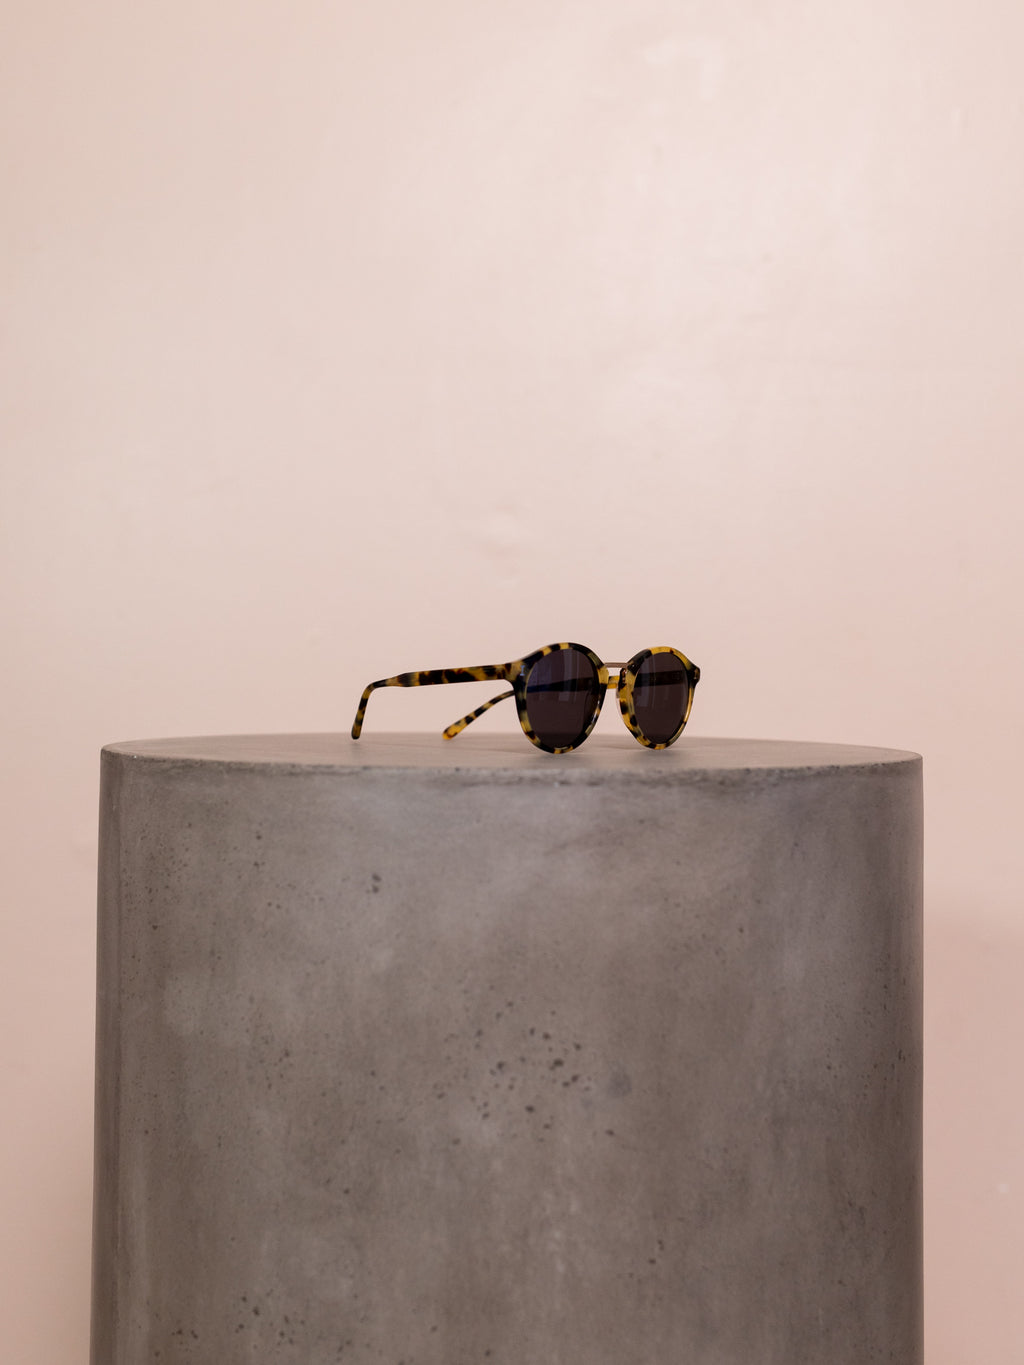 Tortoiseshell sunglasses on pedestal against pink background.